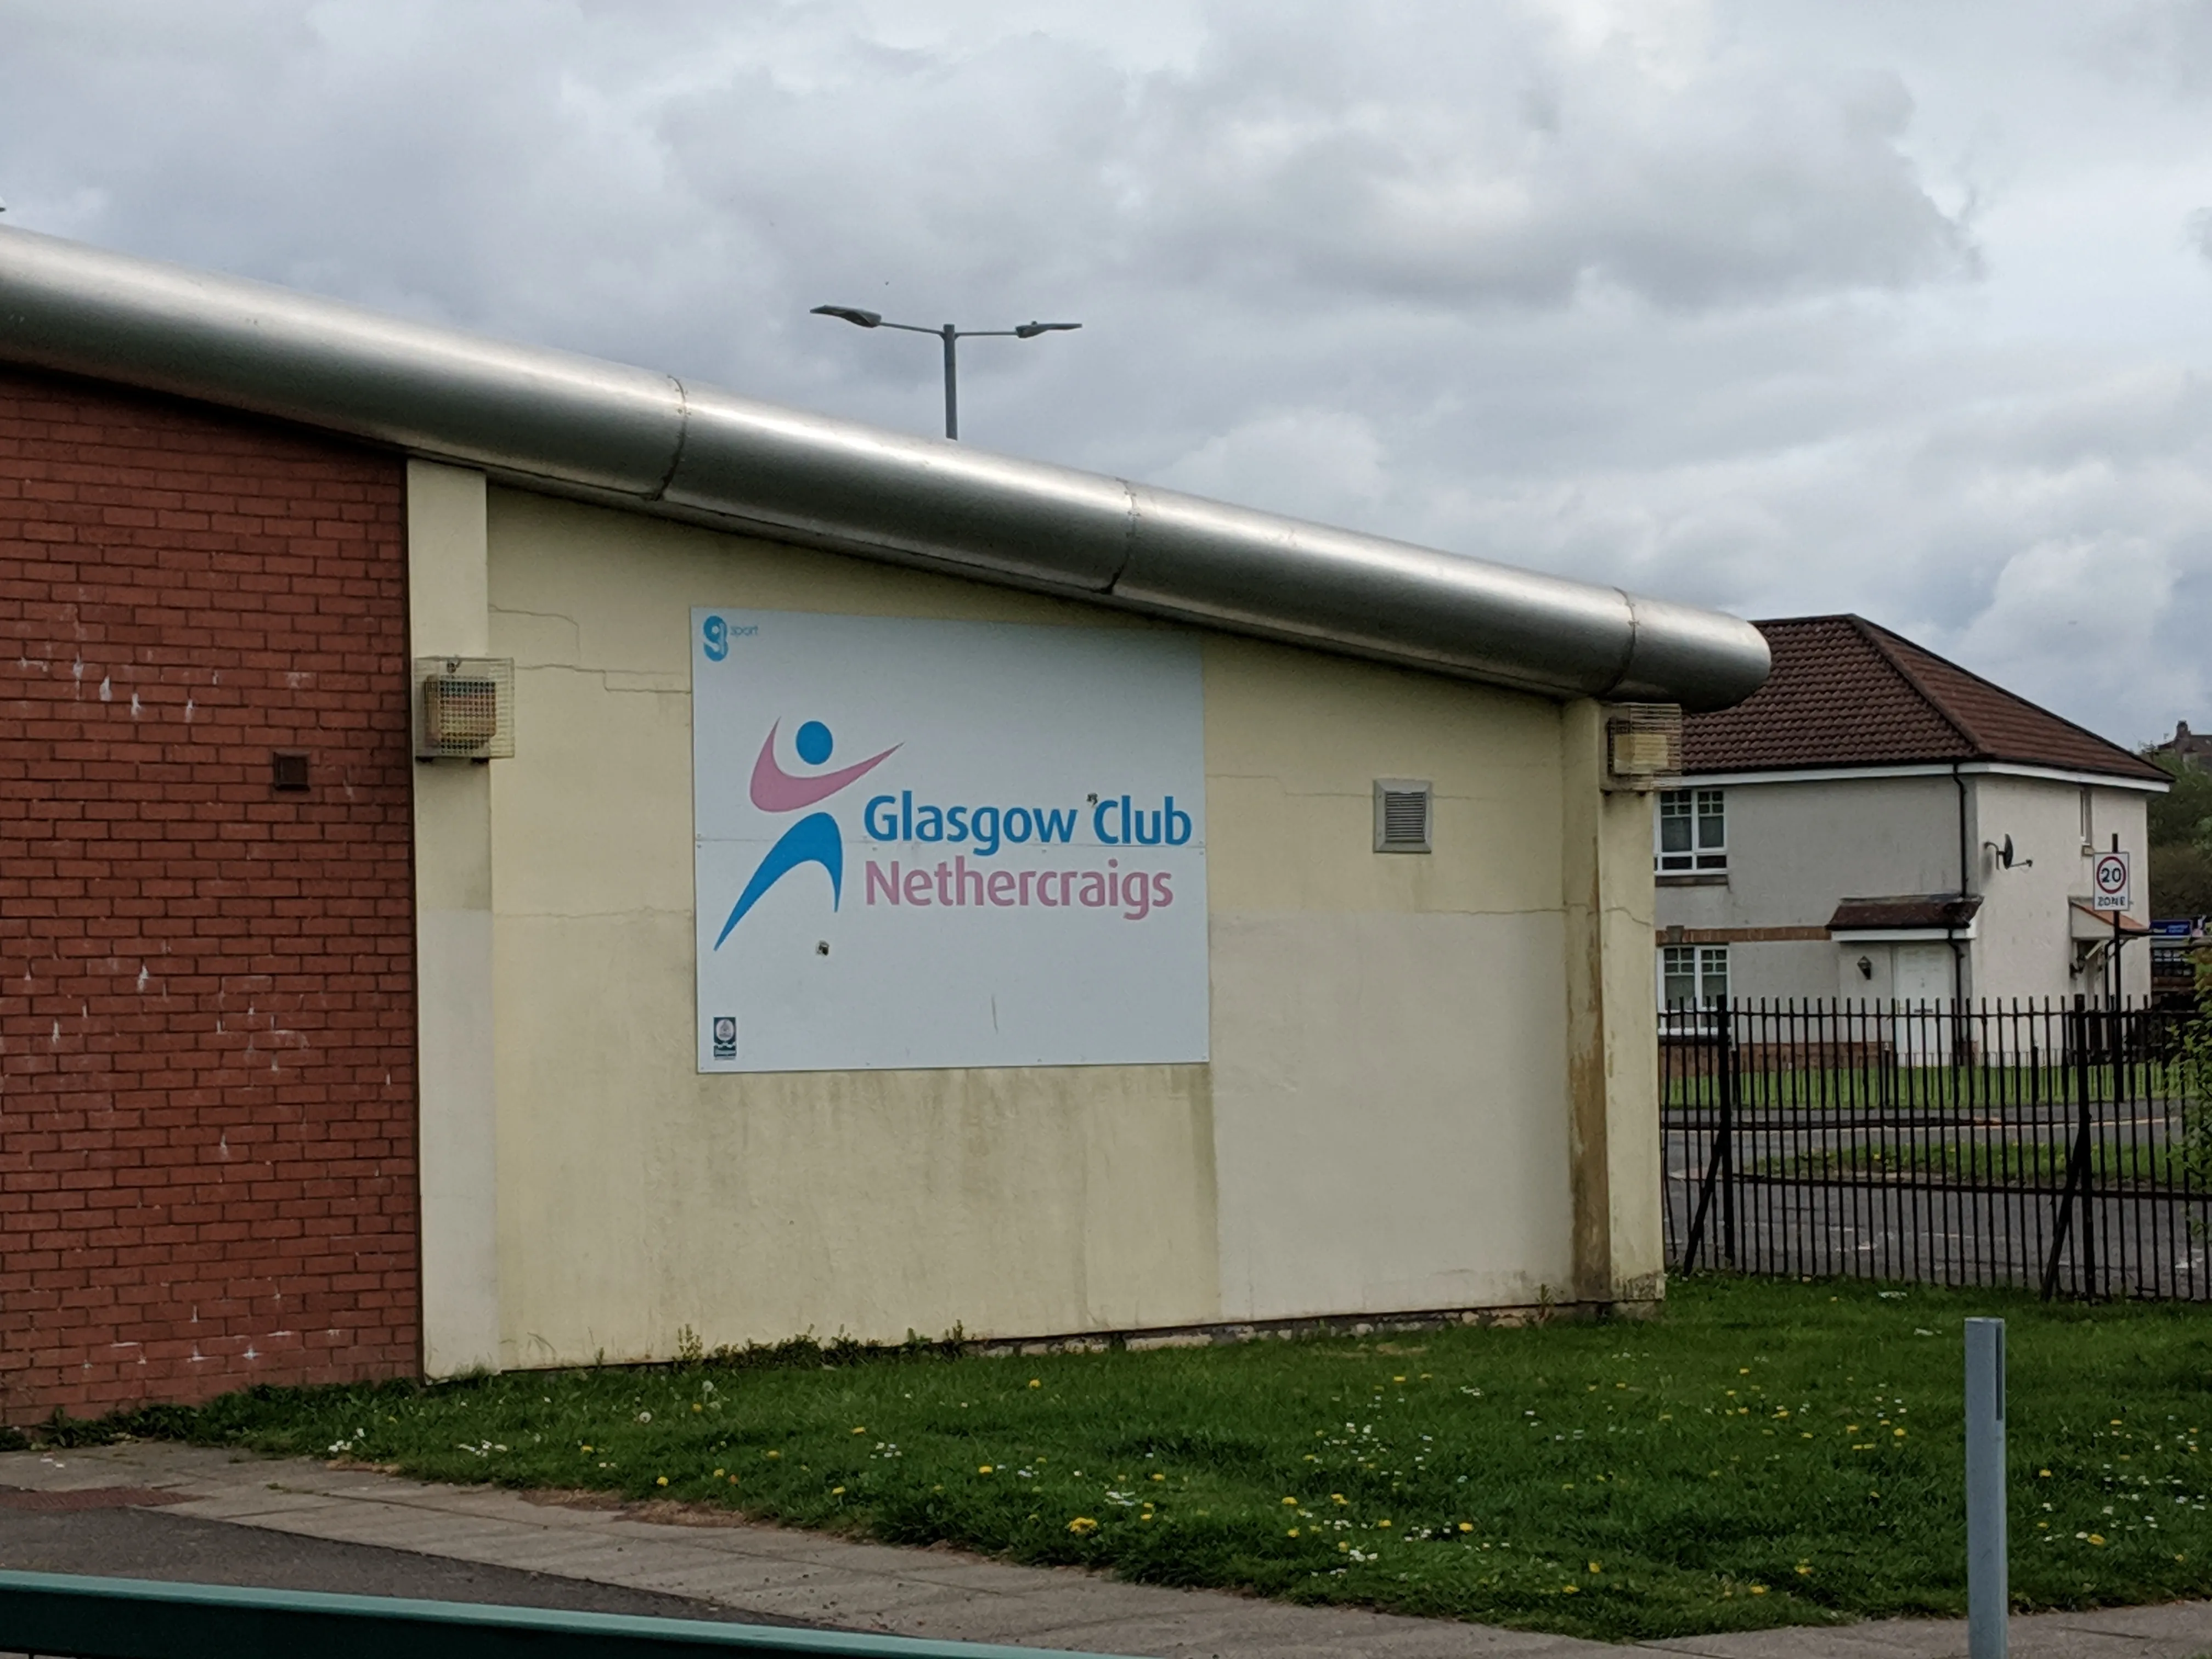 Glasgow Club Nethercraigs